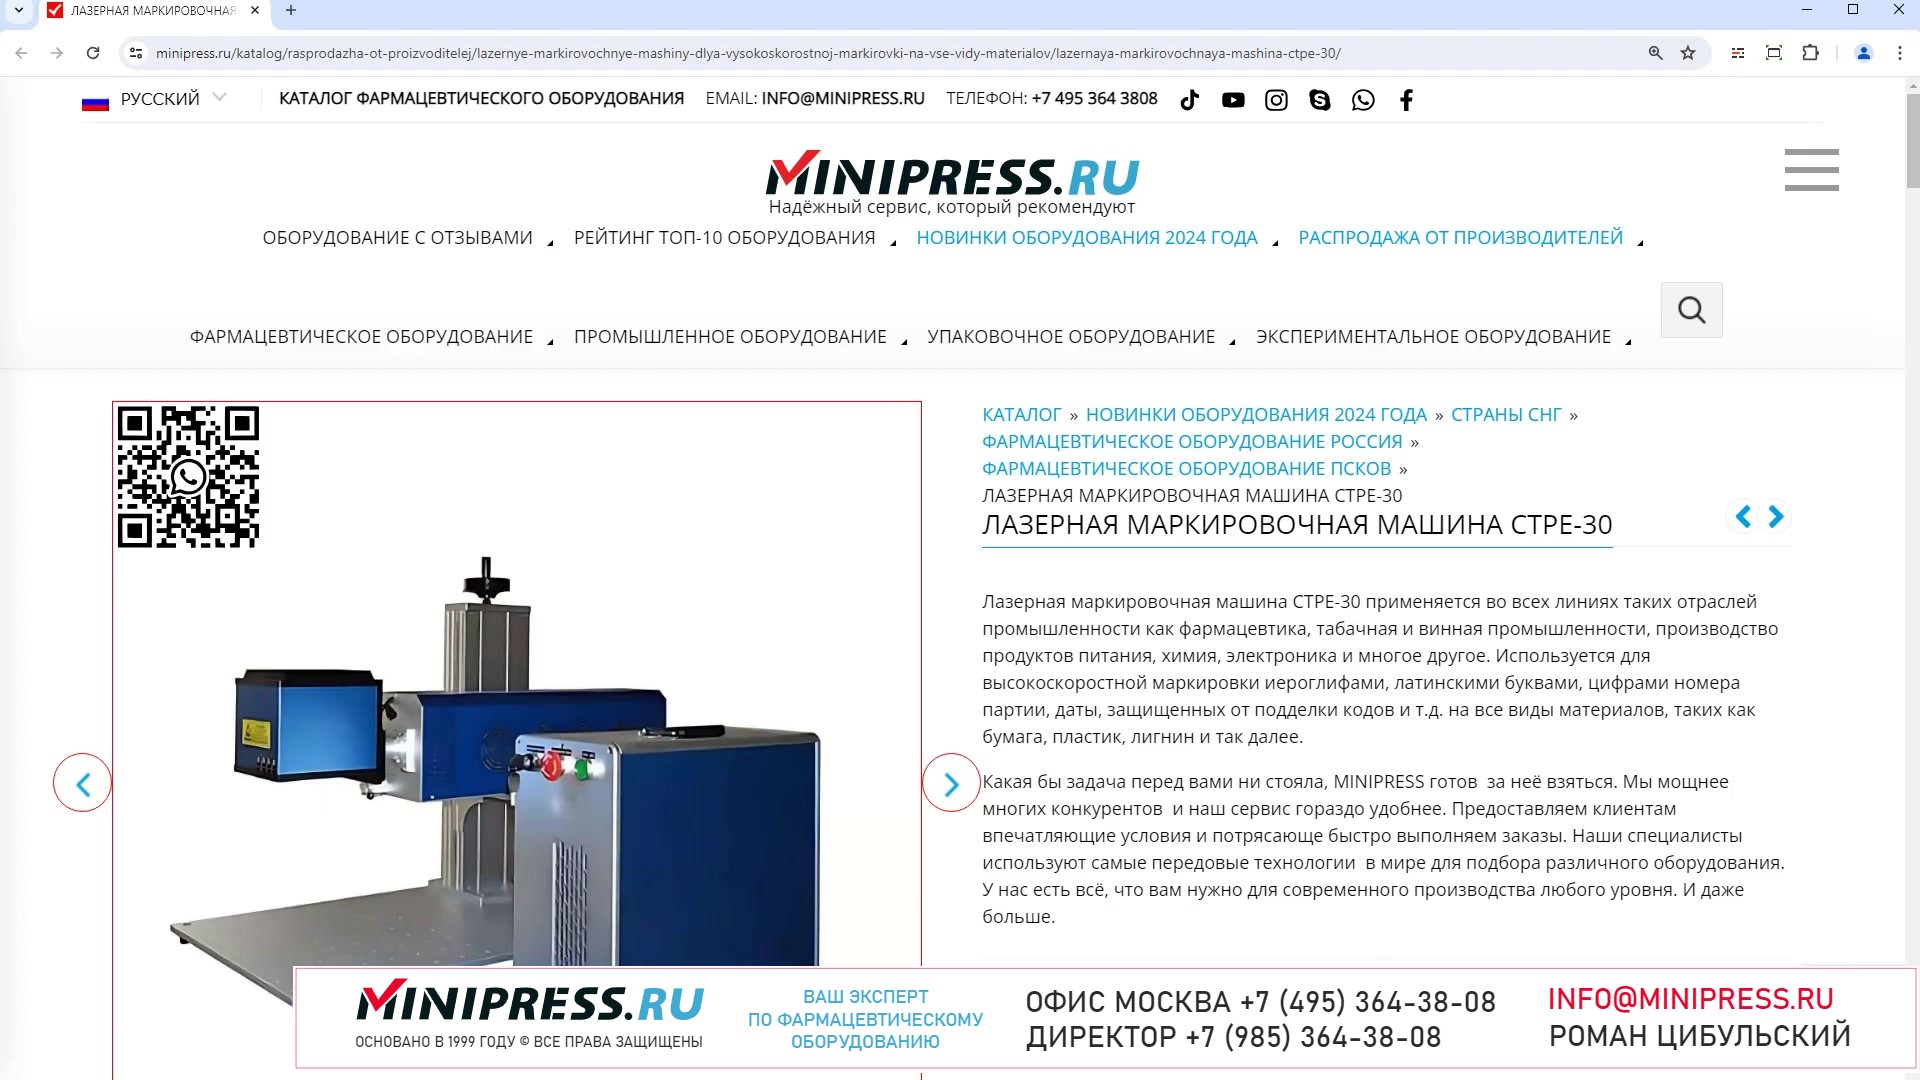 Minipress.ru Лазерная маркировочная машина CTPE-30